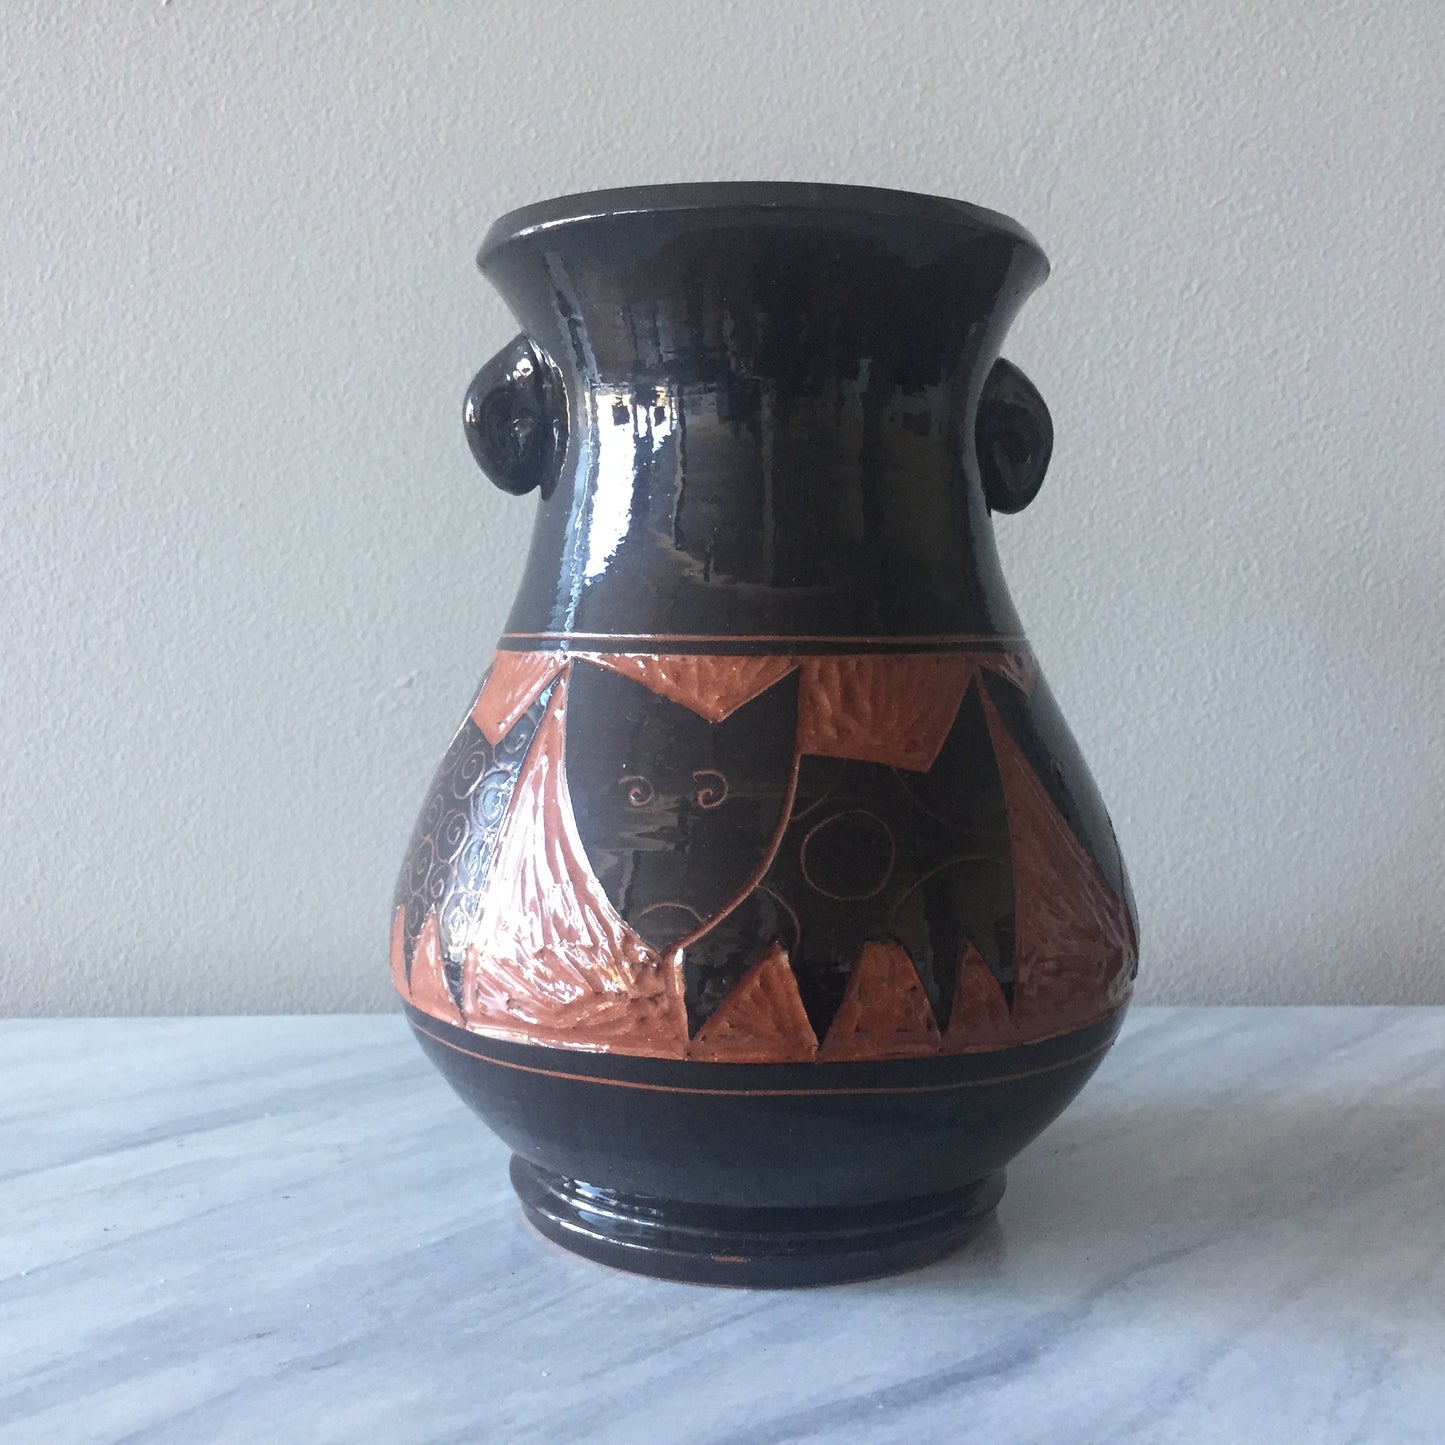 Vase (with decorative dog design)